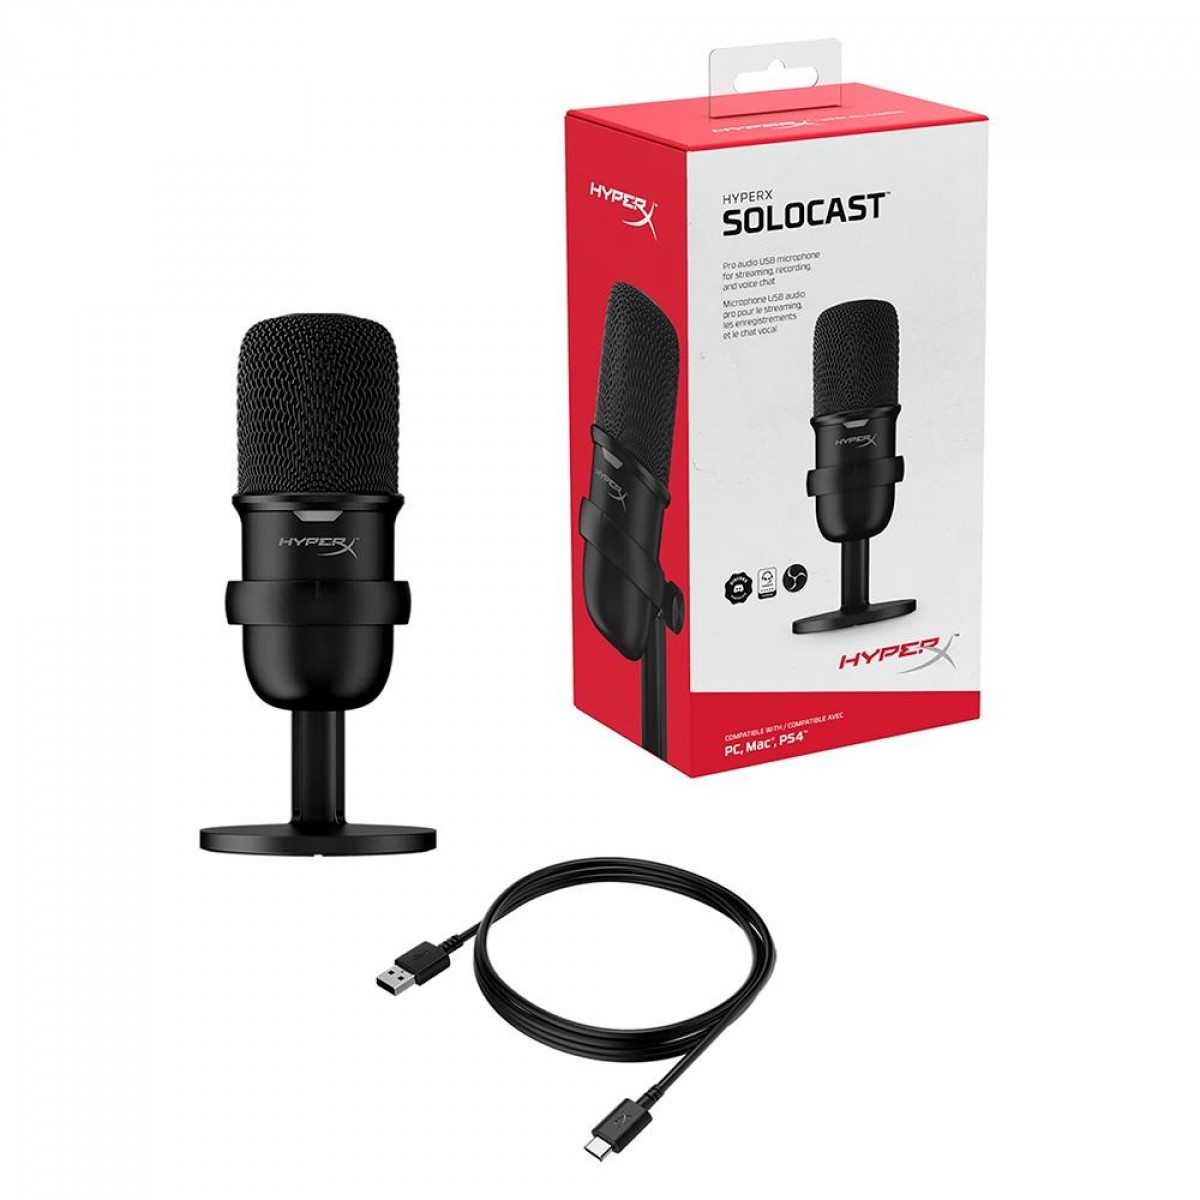 Microfone HyperX Solocast, USB, Compatível PS4, Mac, PC, HMIS1X-XX-BK/G